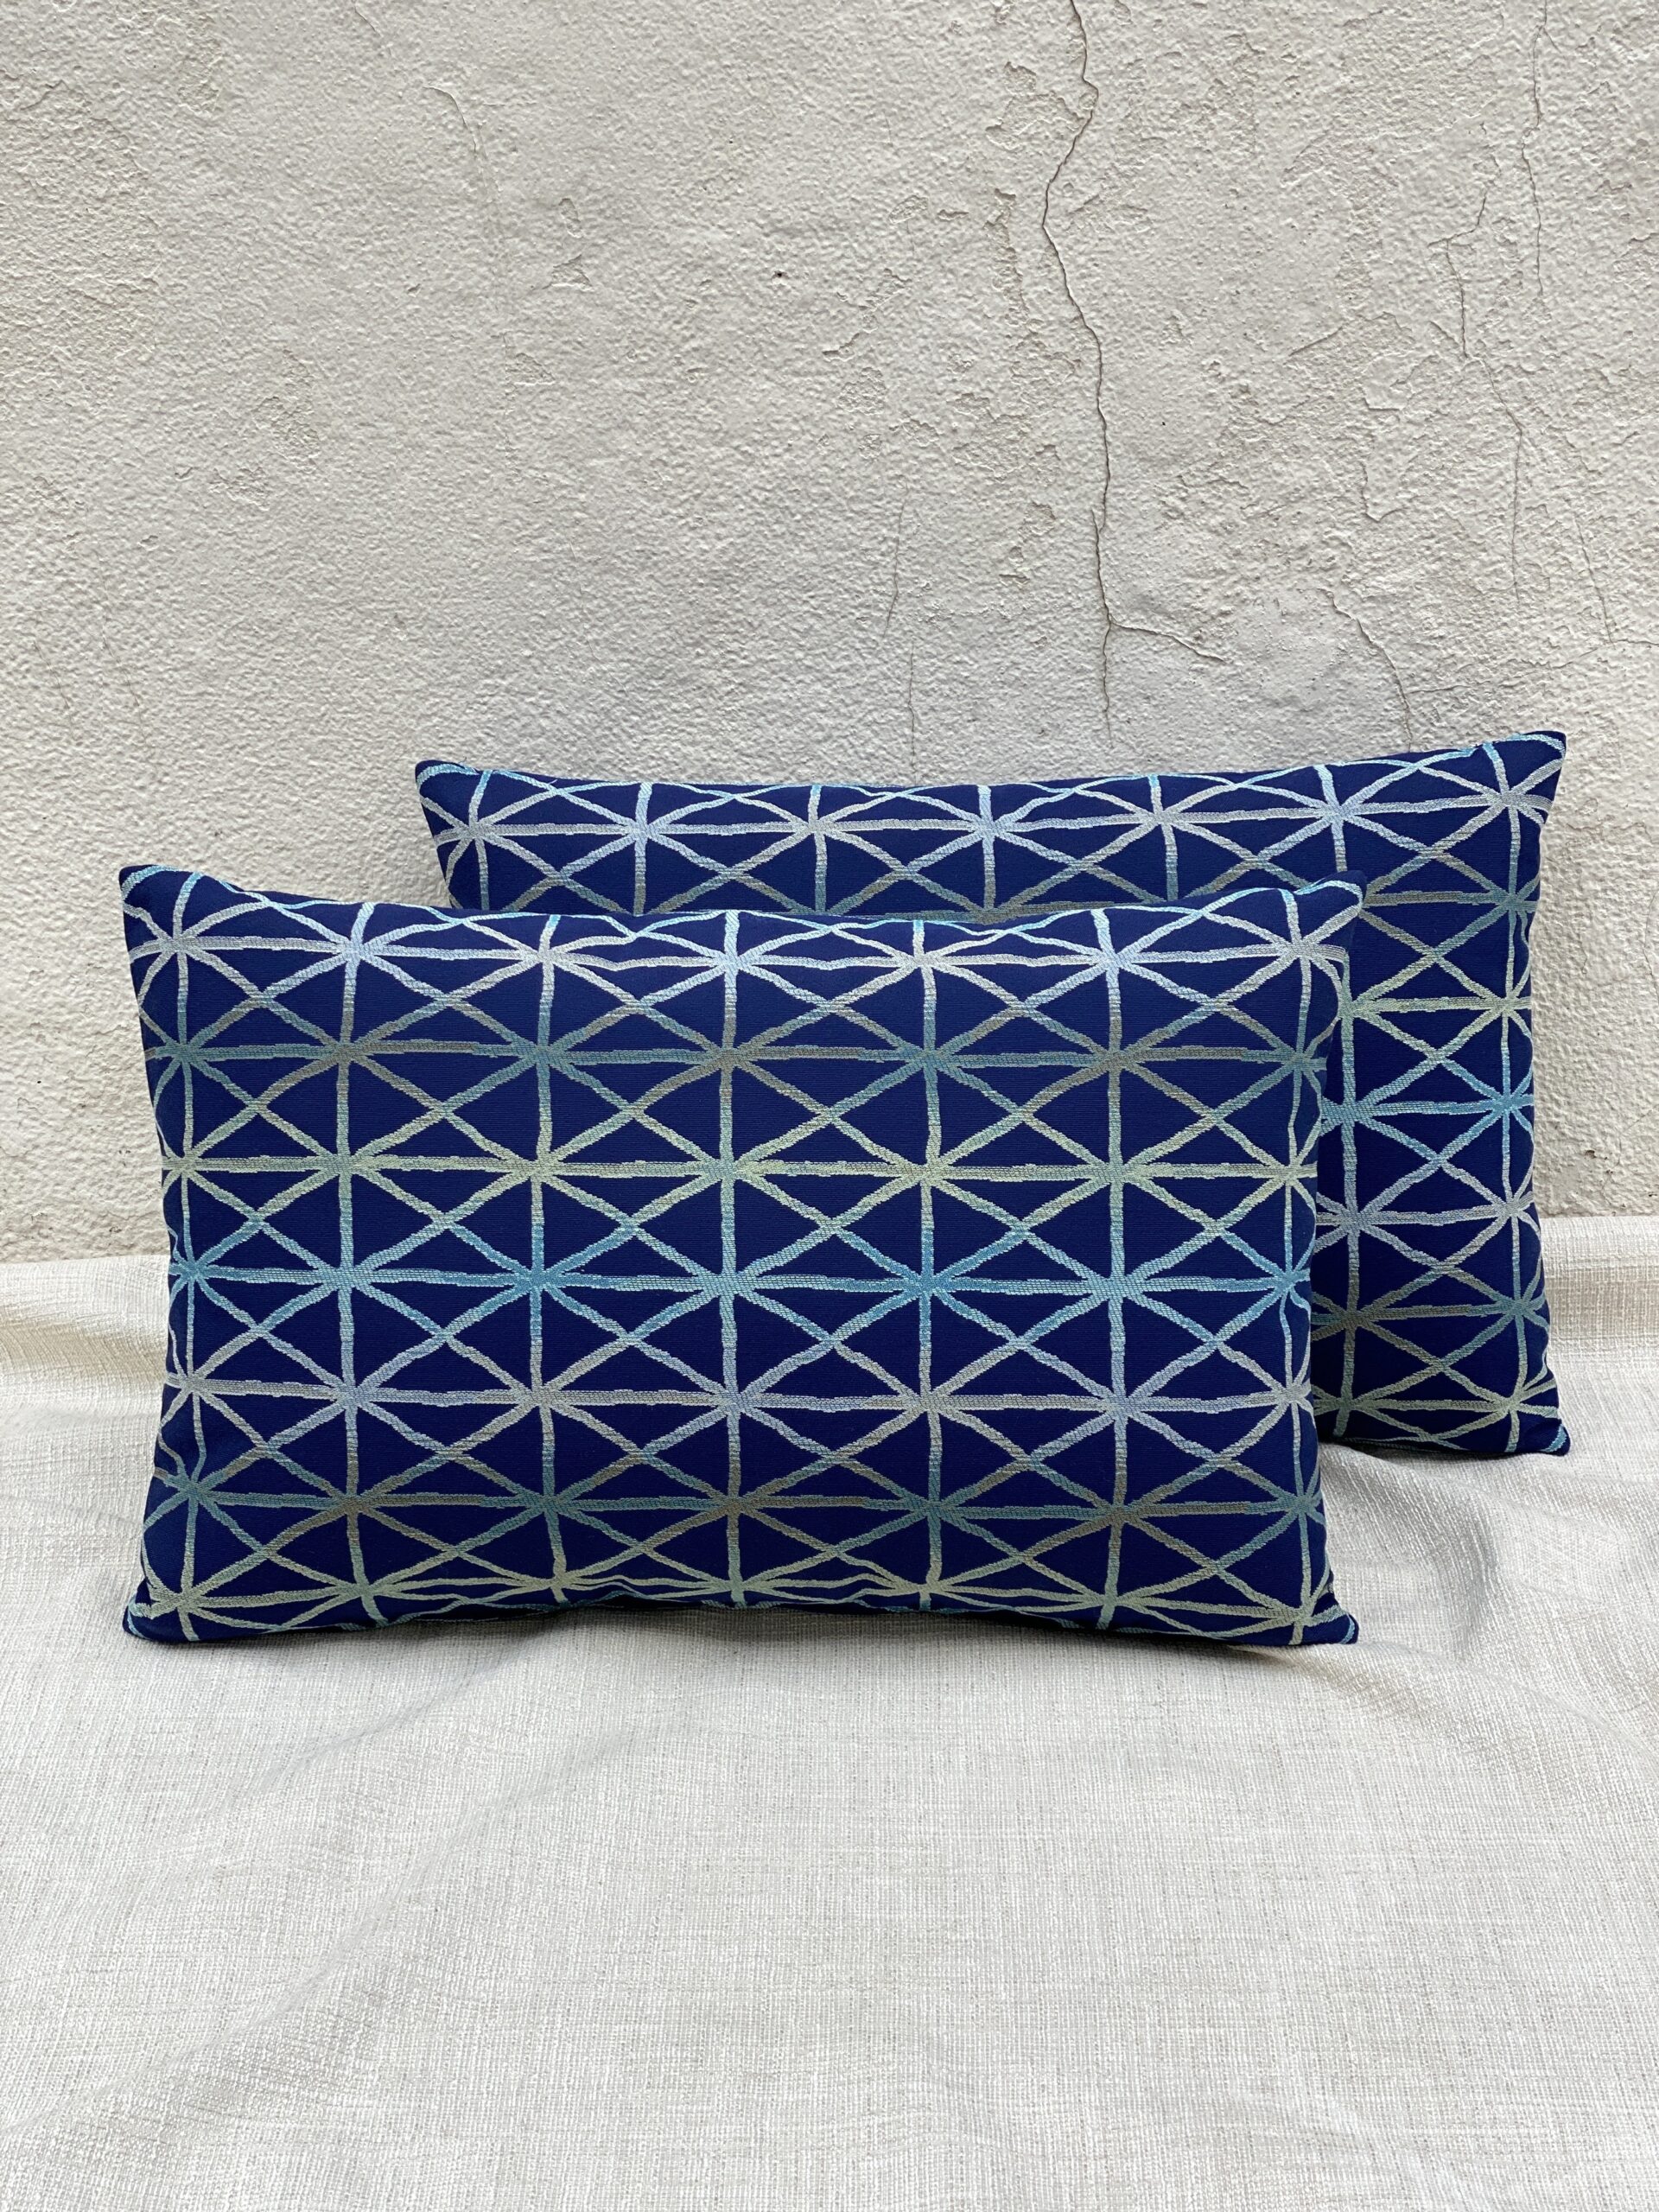 Burch Batik Pillows